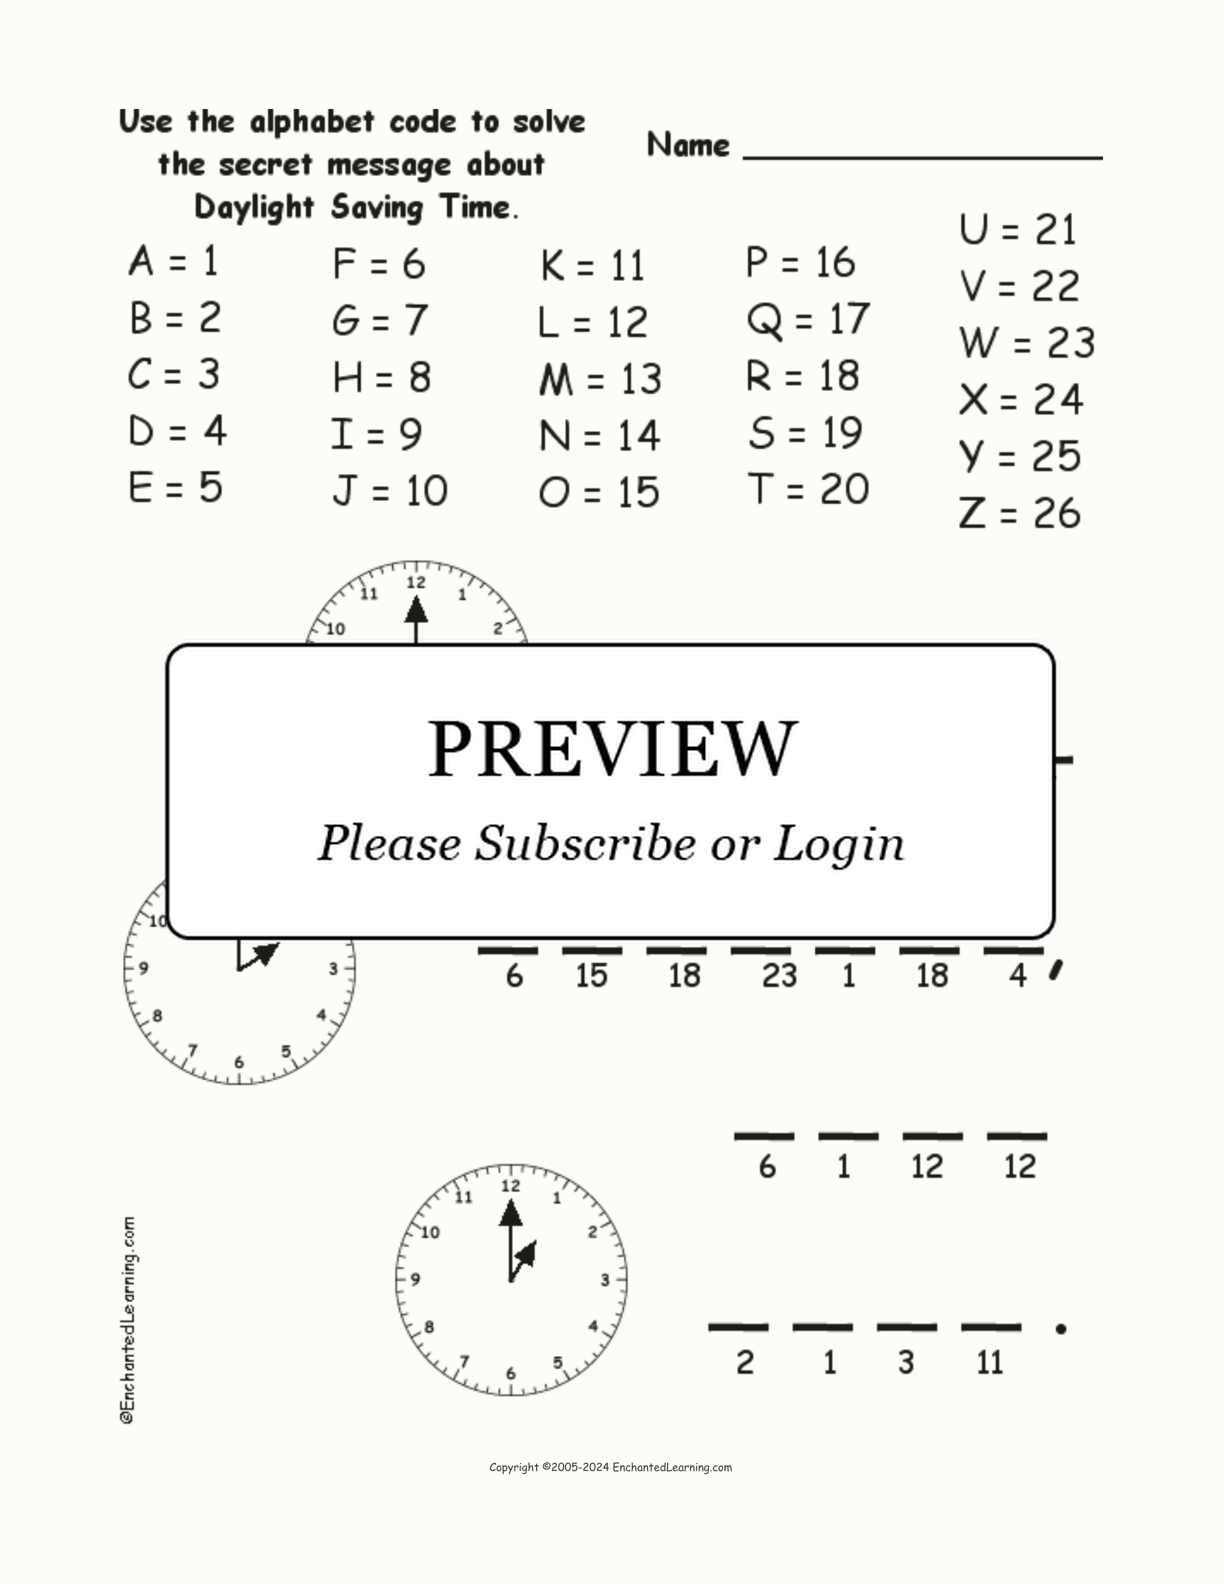 Daylight Saving Time Alphabet Code interactive worksheet page 1